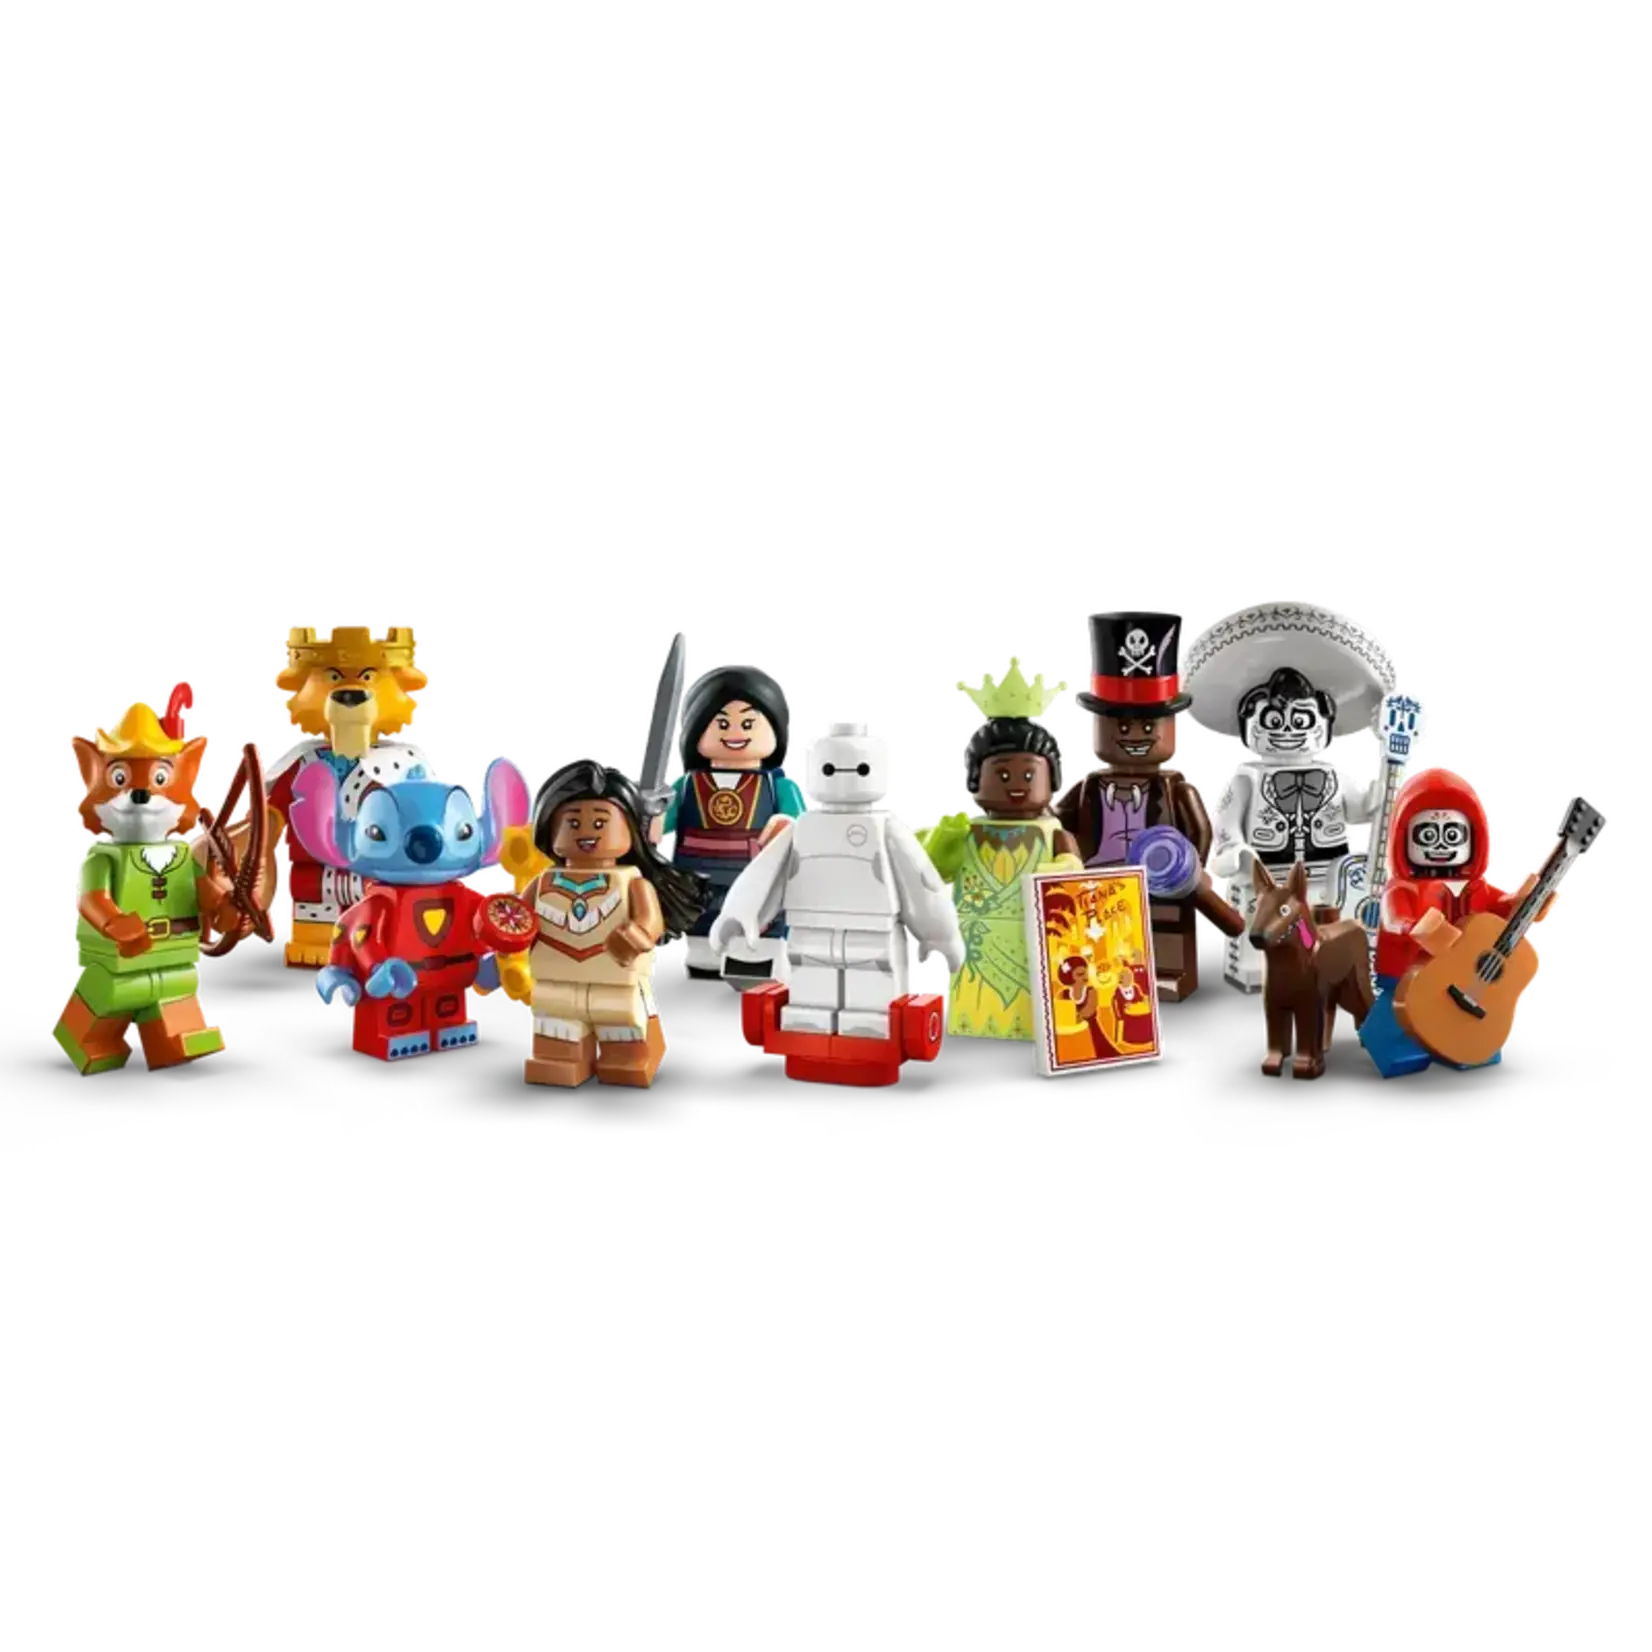 Lego 71038 Minifigures Disney 100